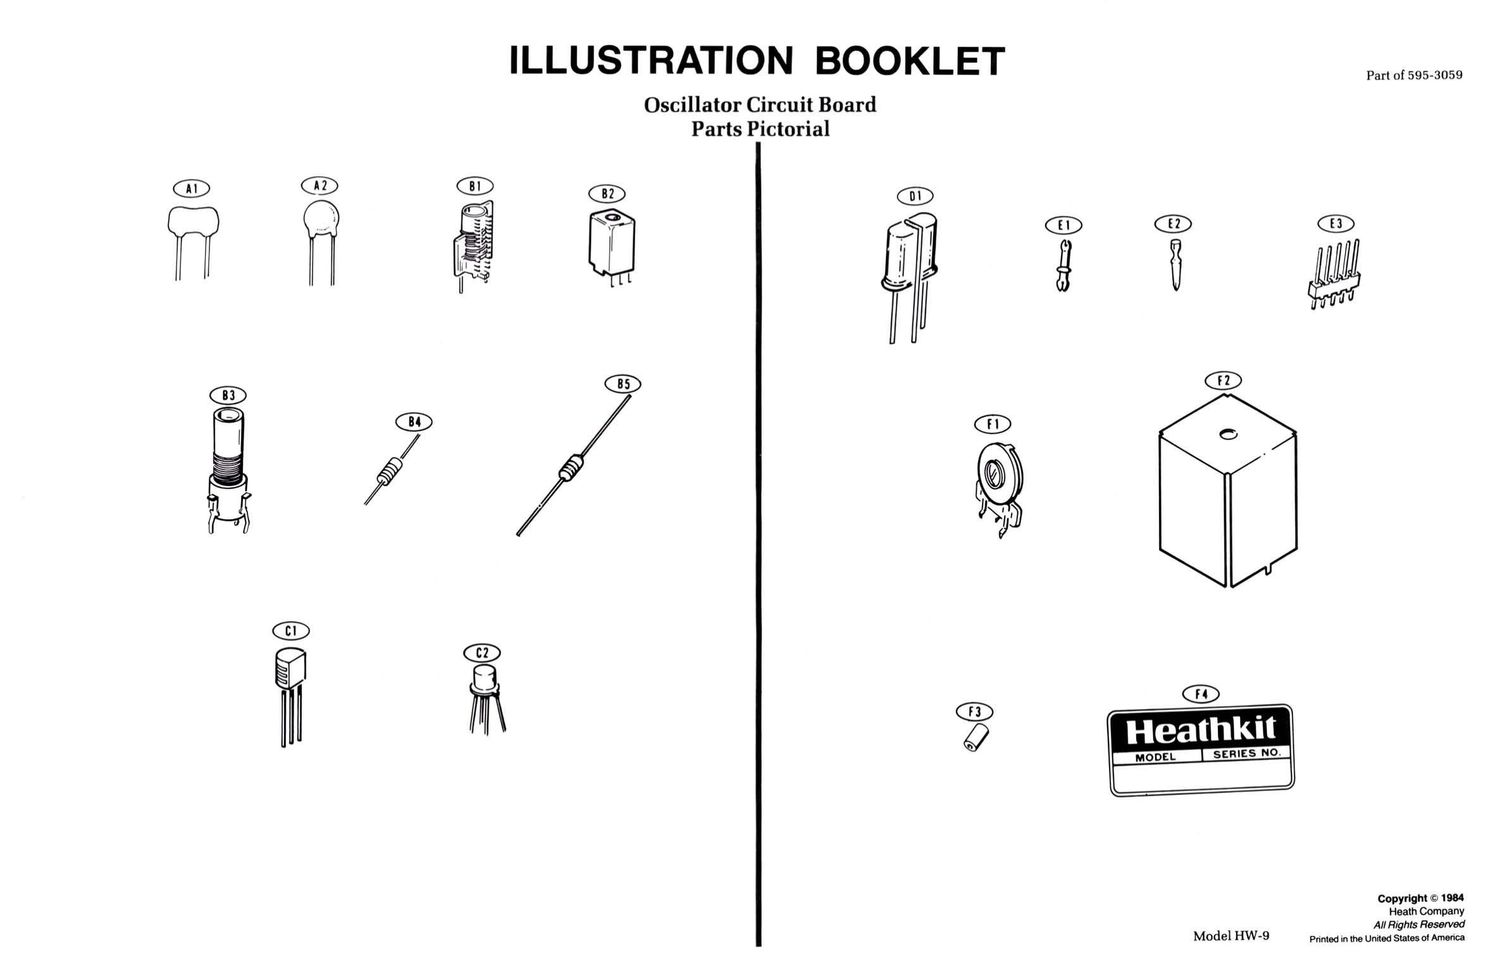 Heathkit HW 9 Illustration Booklet